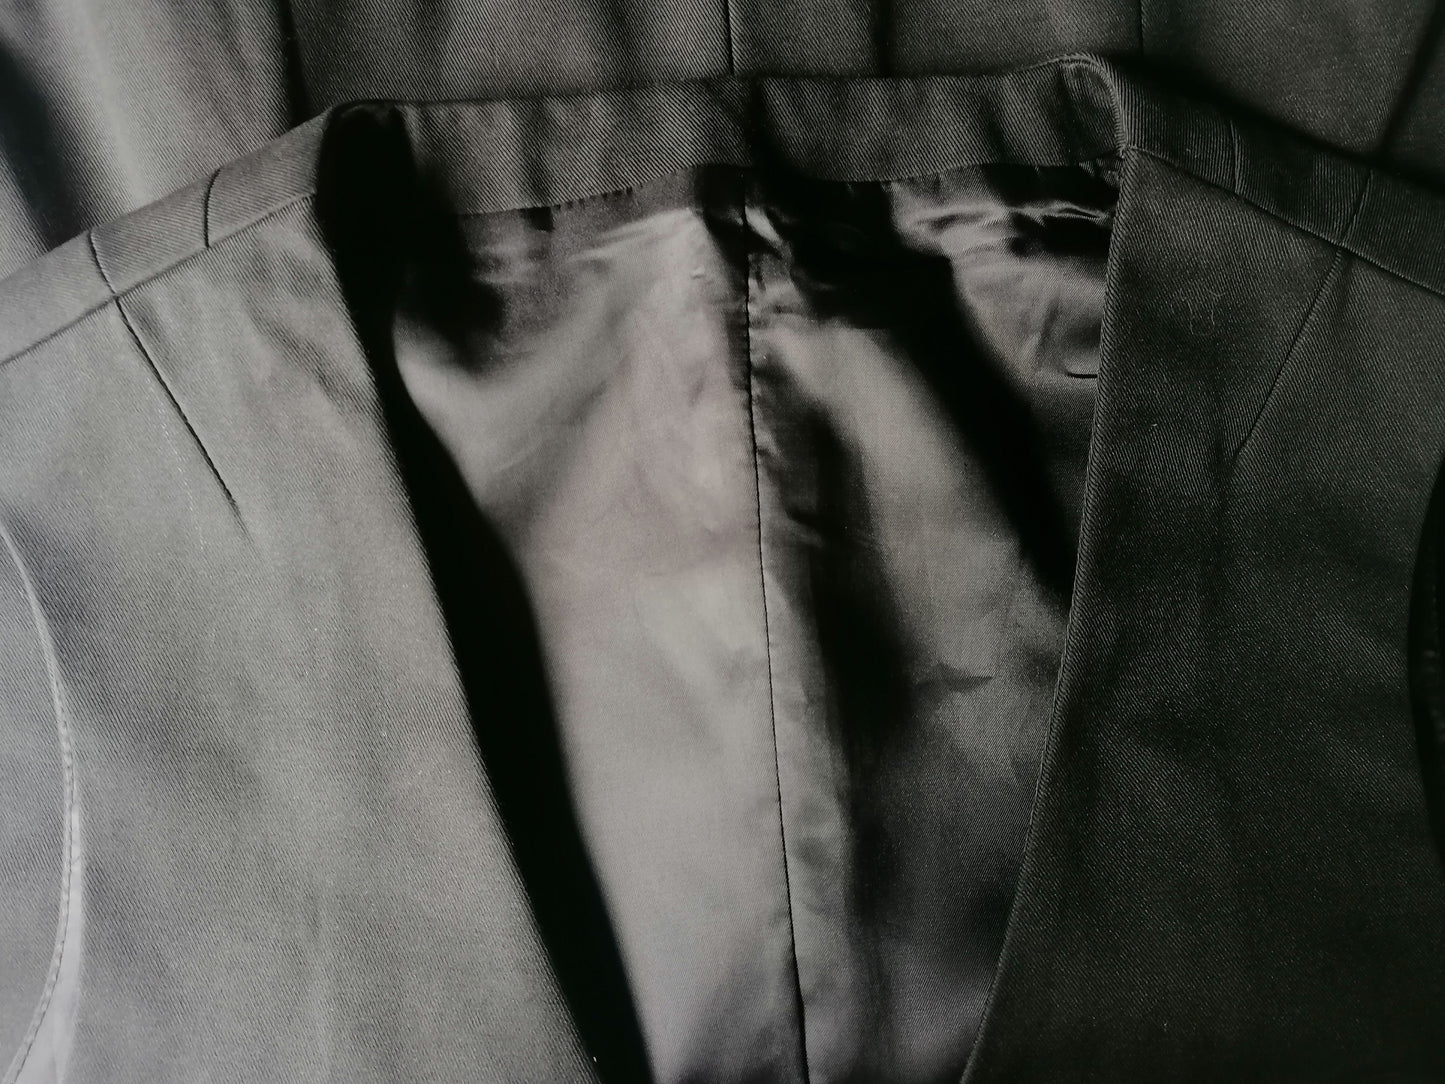 Devred waistcoat. Black colored. Size S.